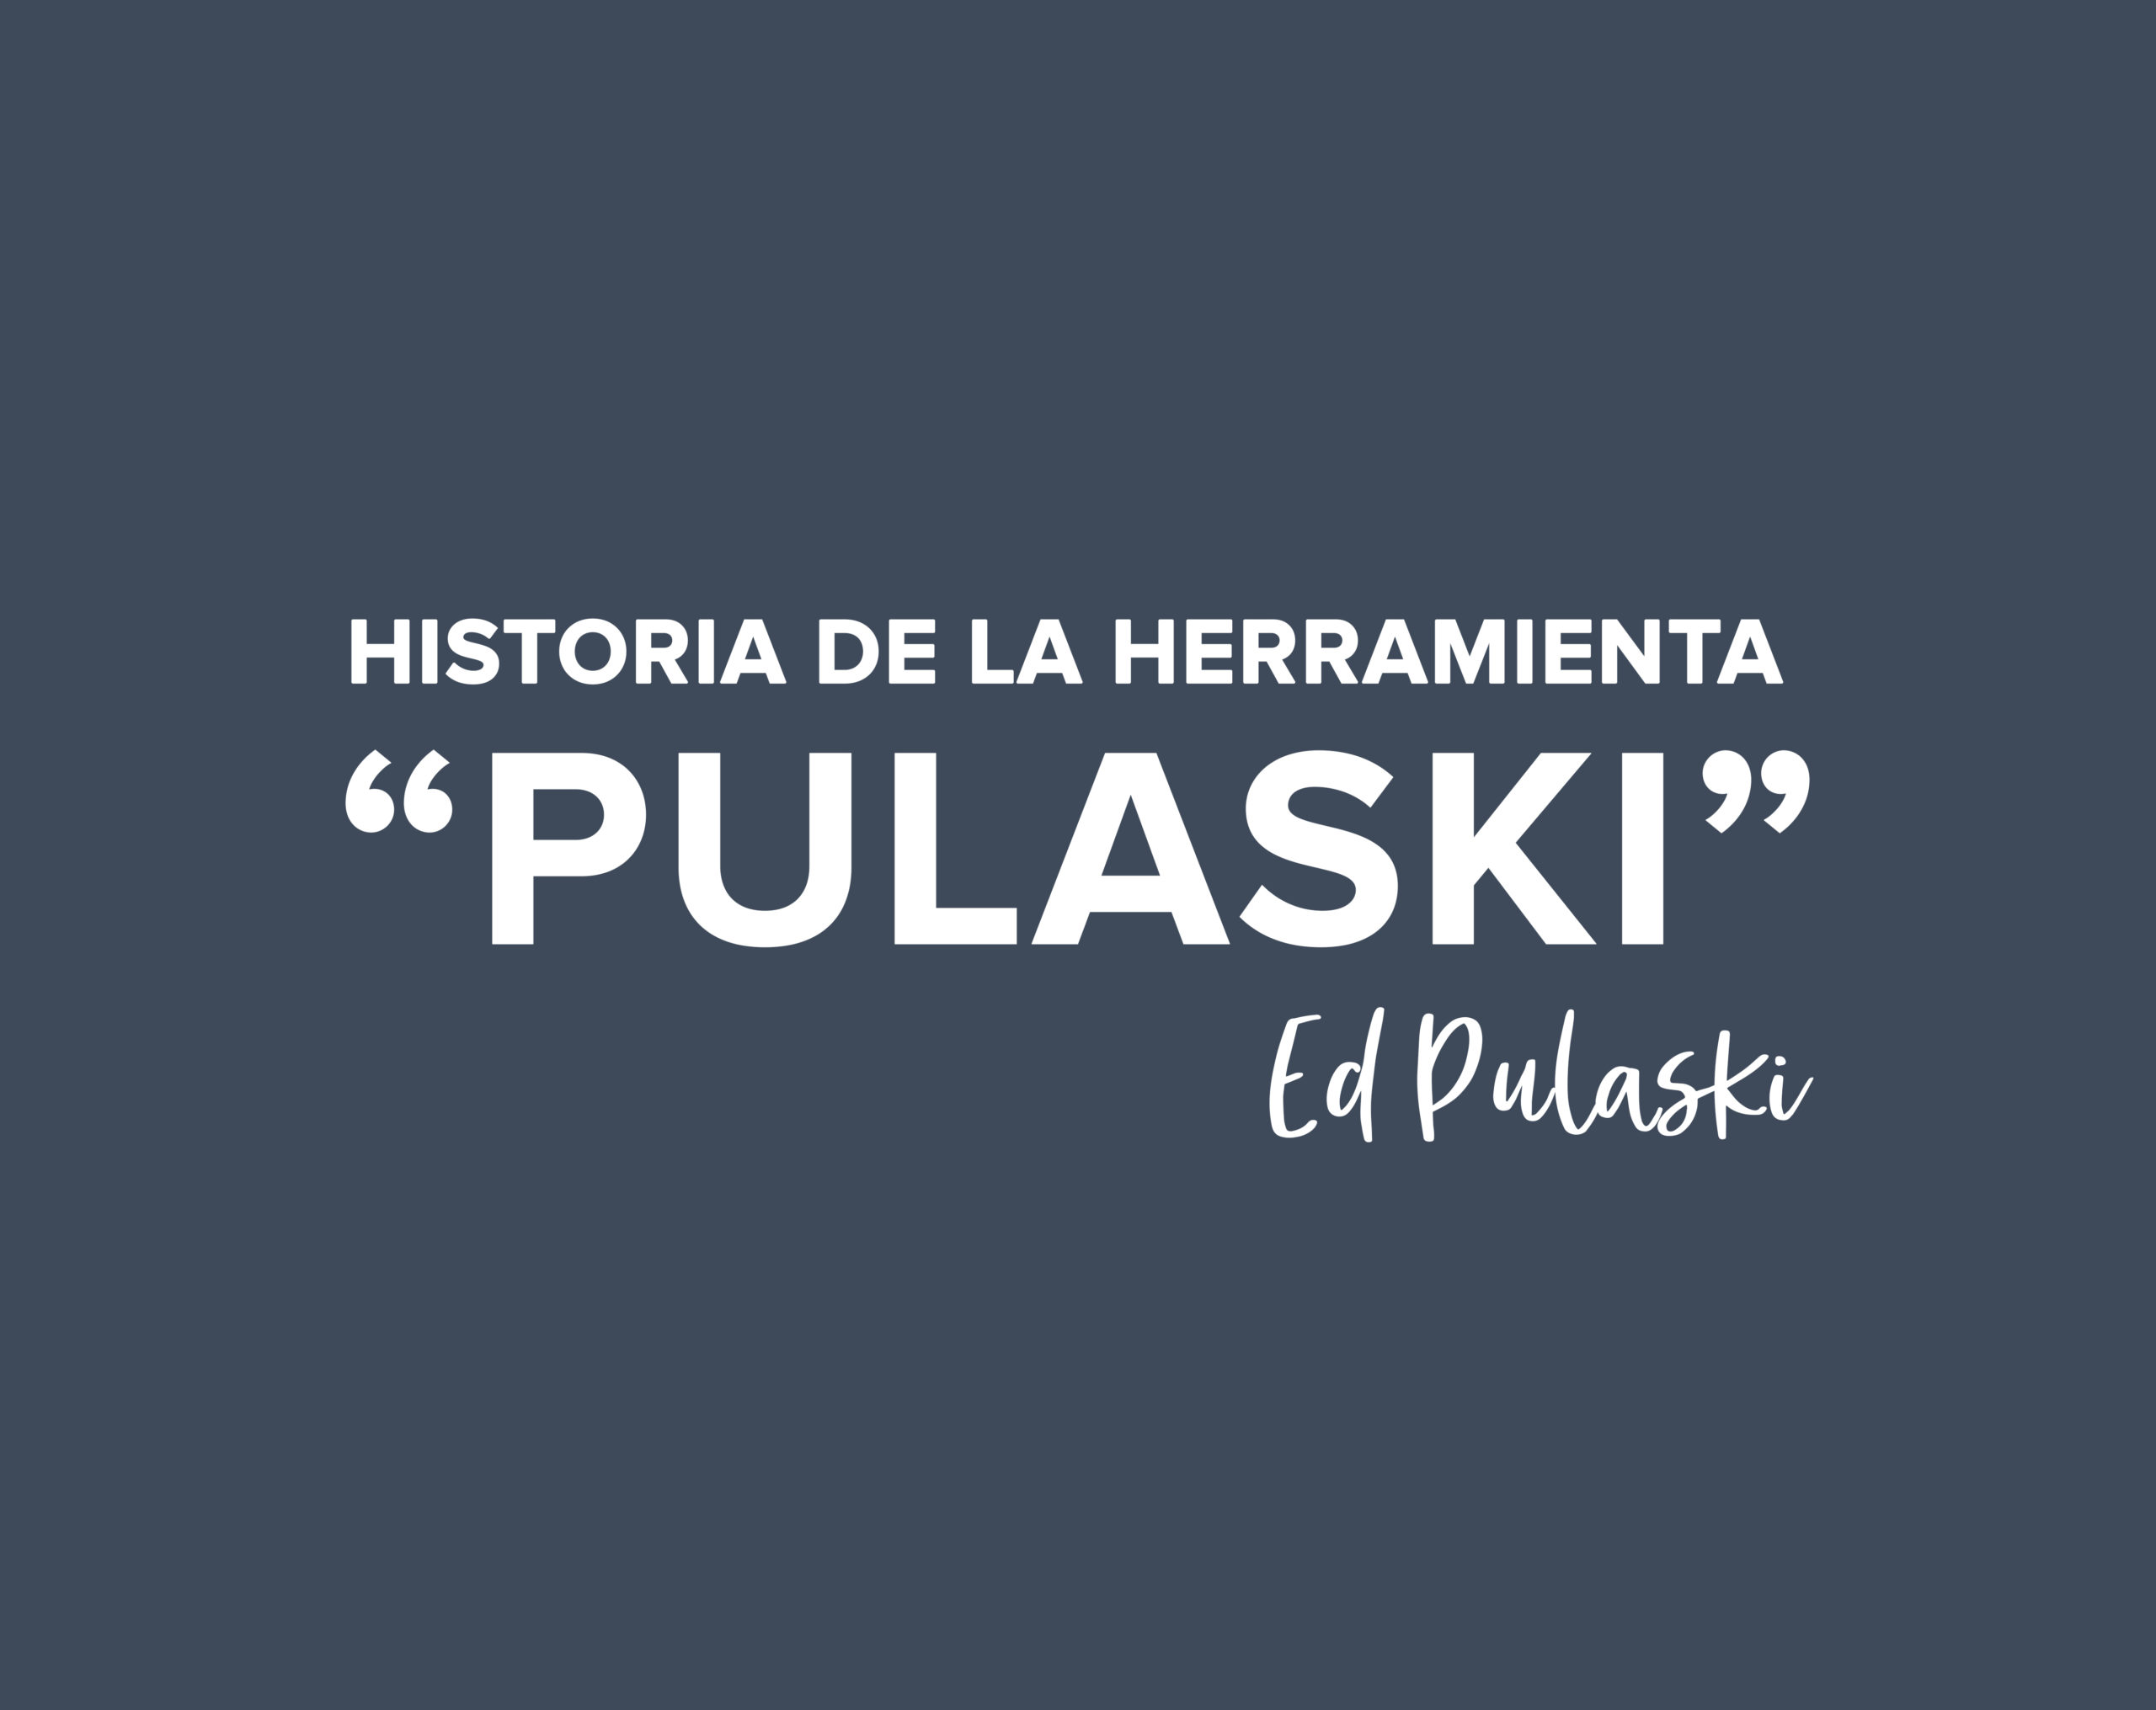 El Pulaski